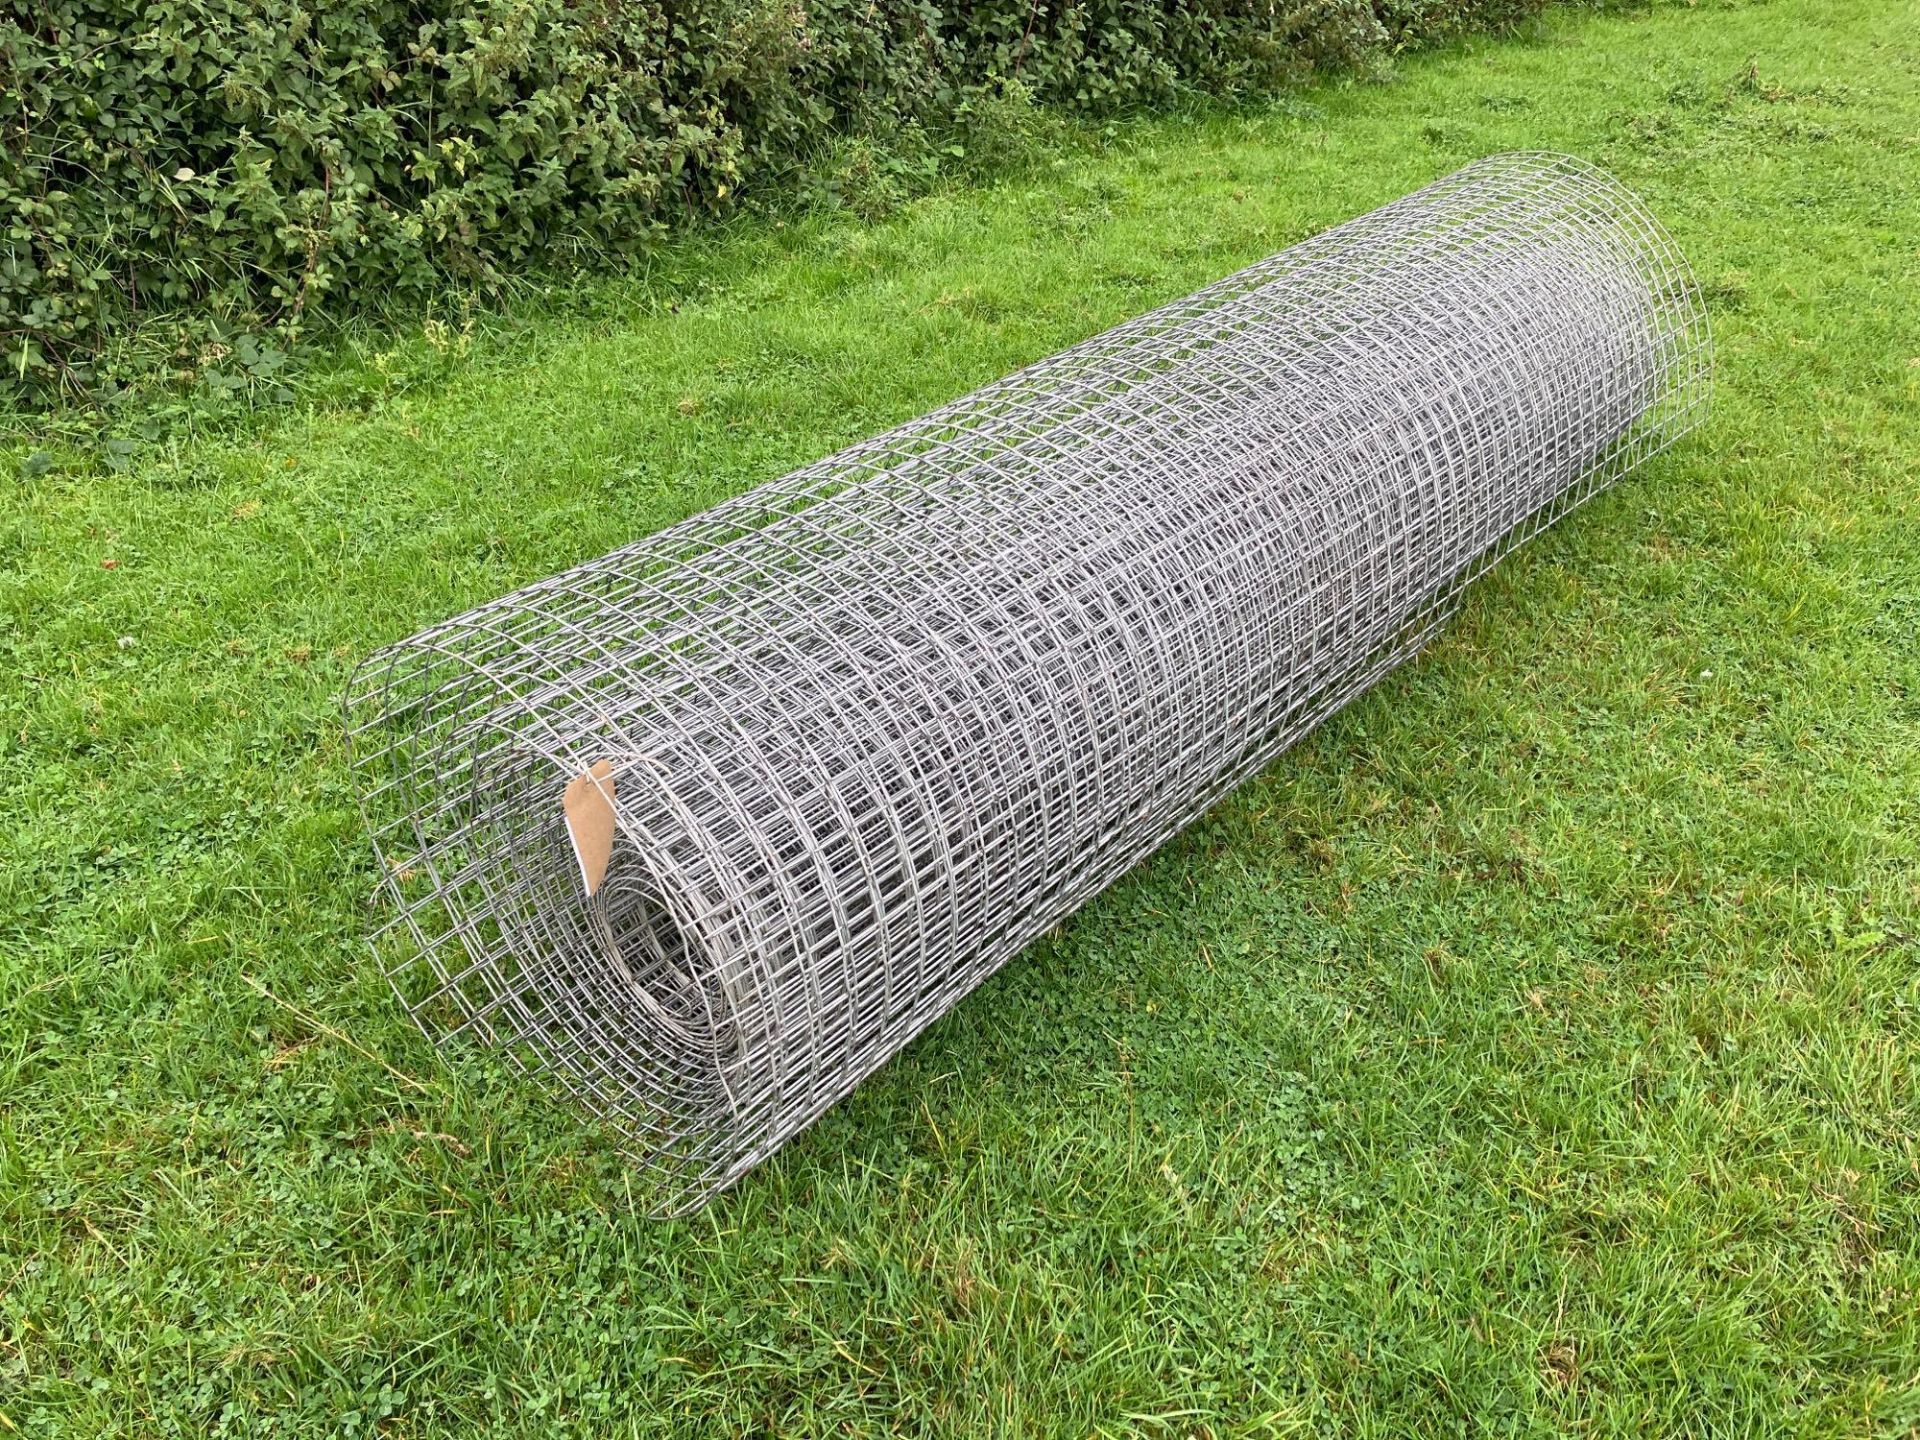 Quantity heavy duty wire mesh